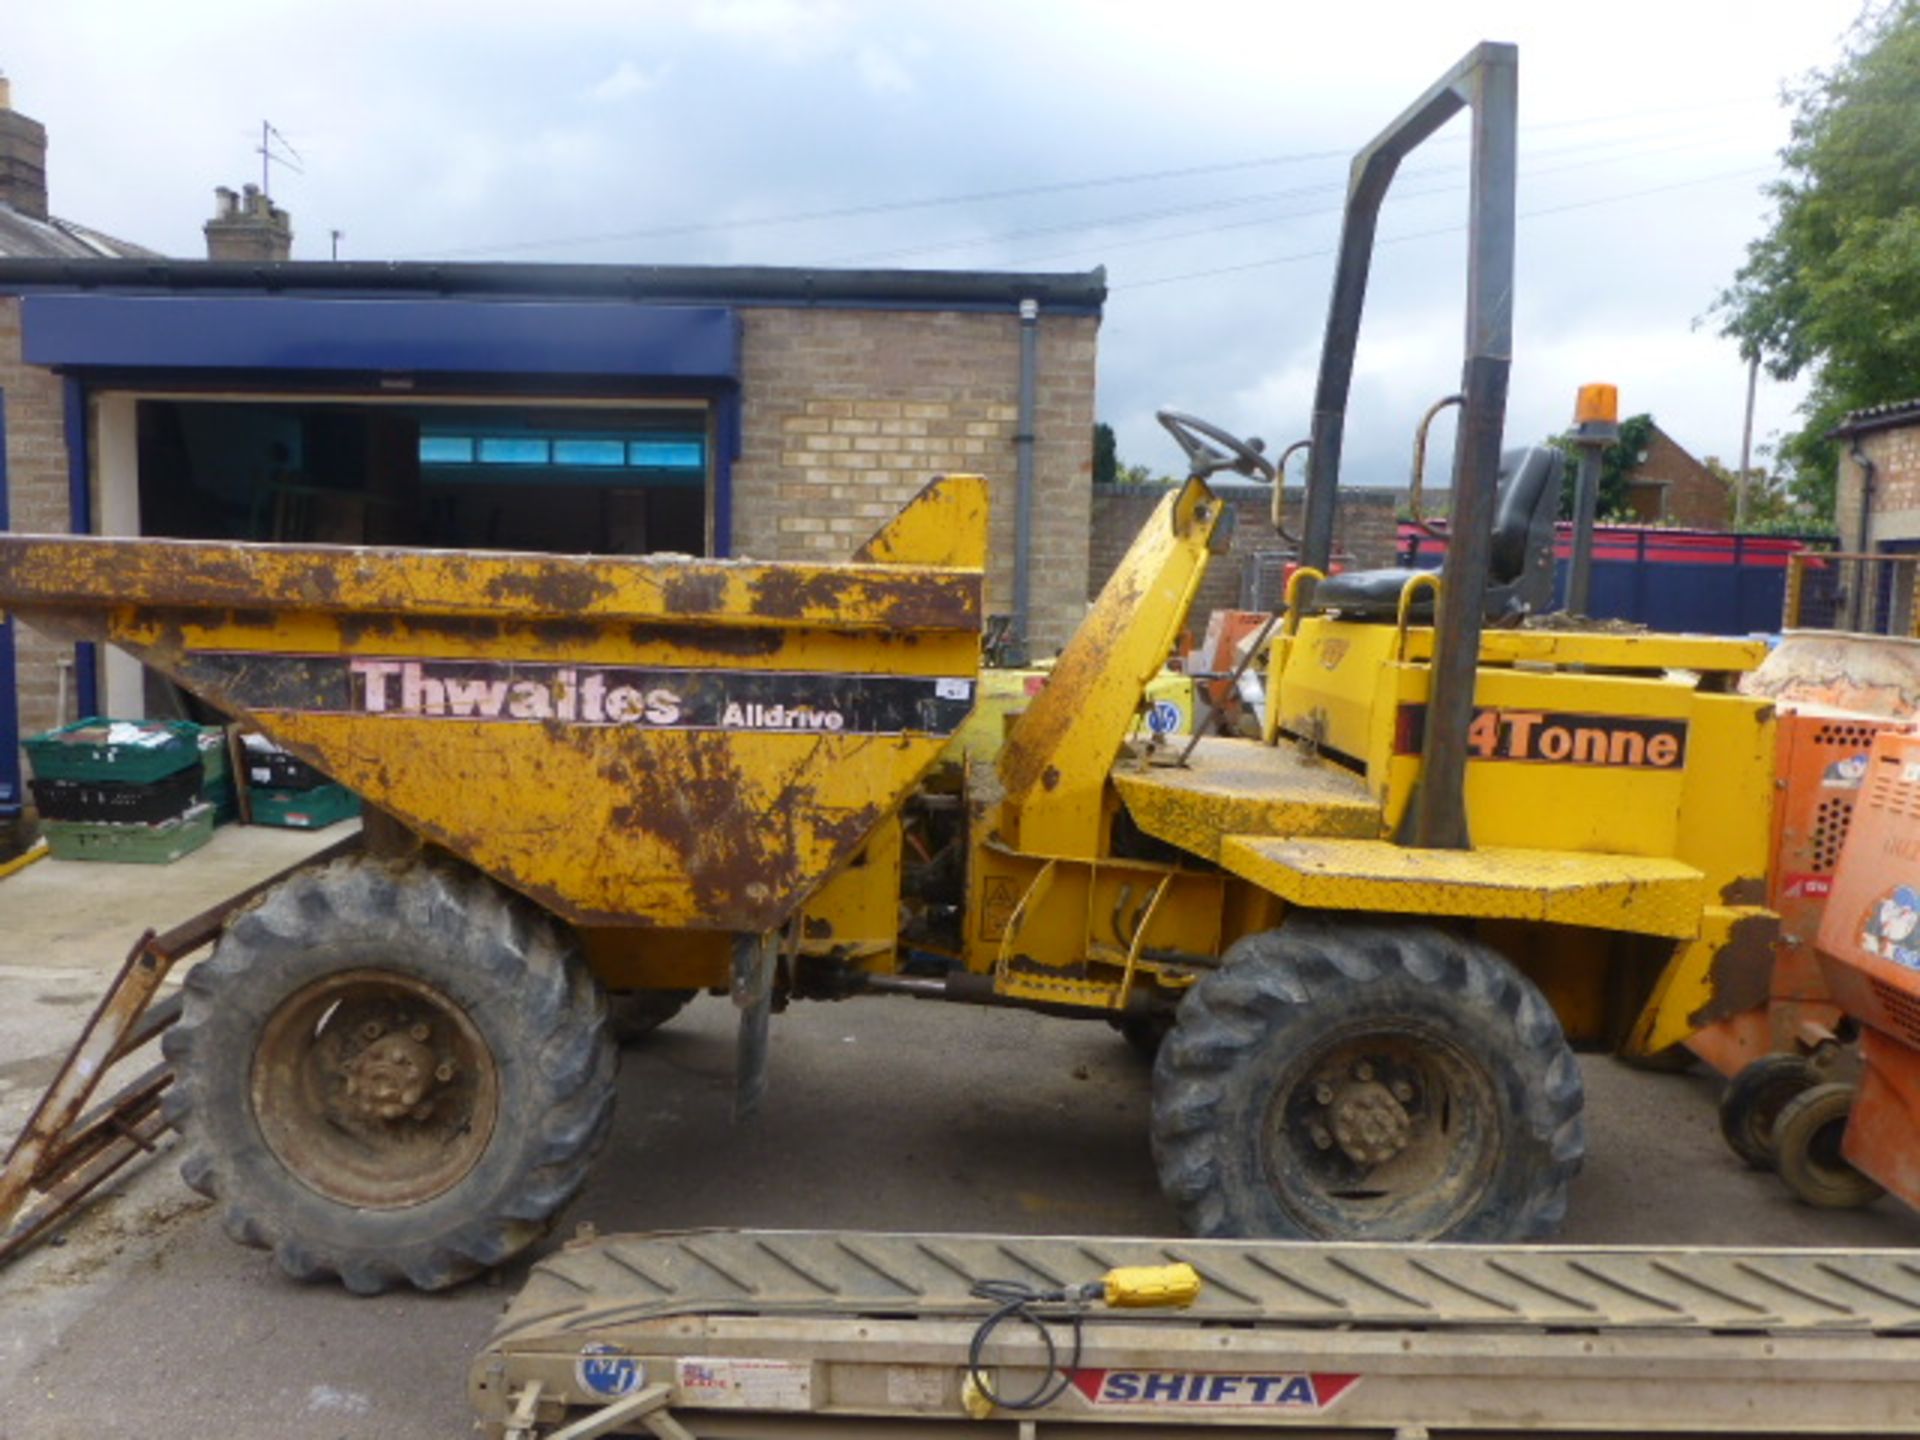 Thwaites 4 tonne All Drive model MACH 040/2 dumper